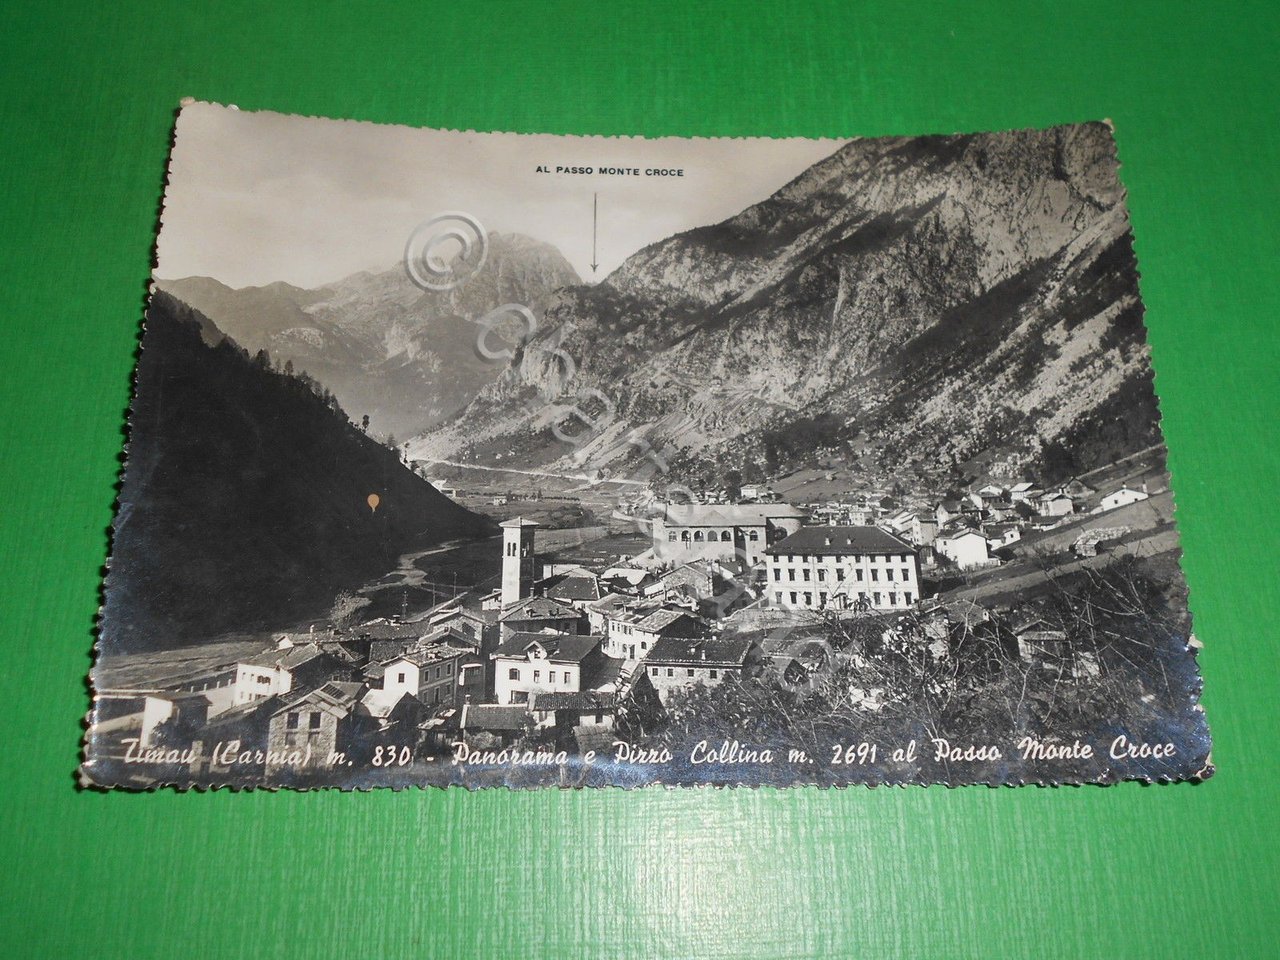 Cartolina Timau ( Carnia ) - Panorama e Pizzo Collina …